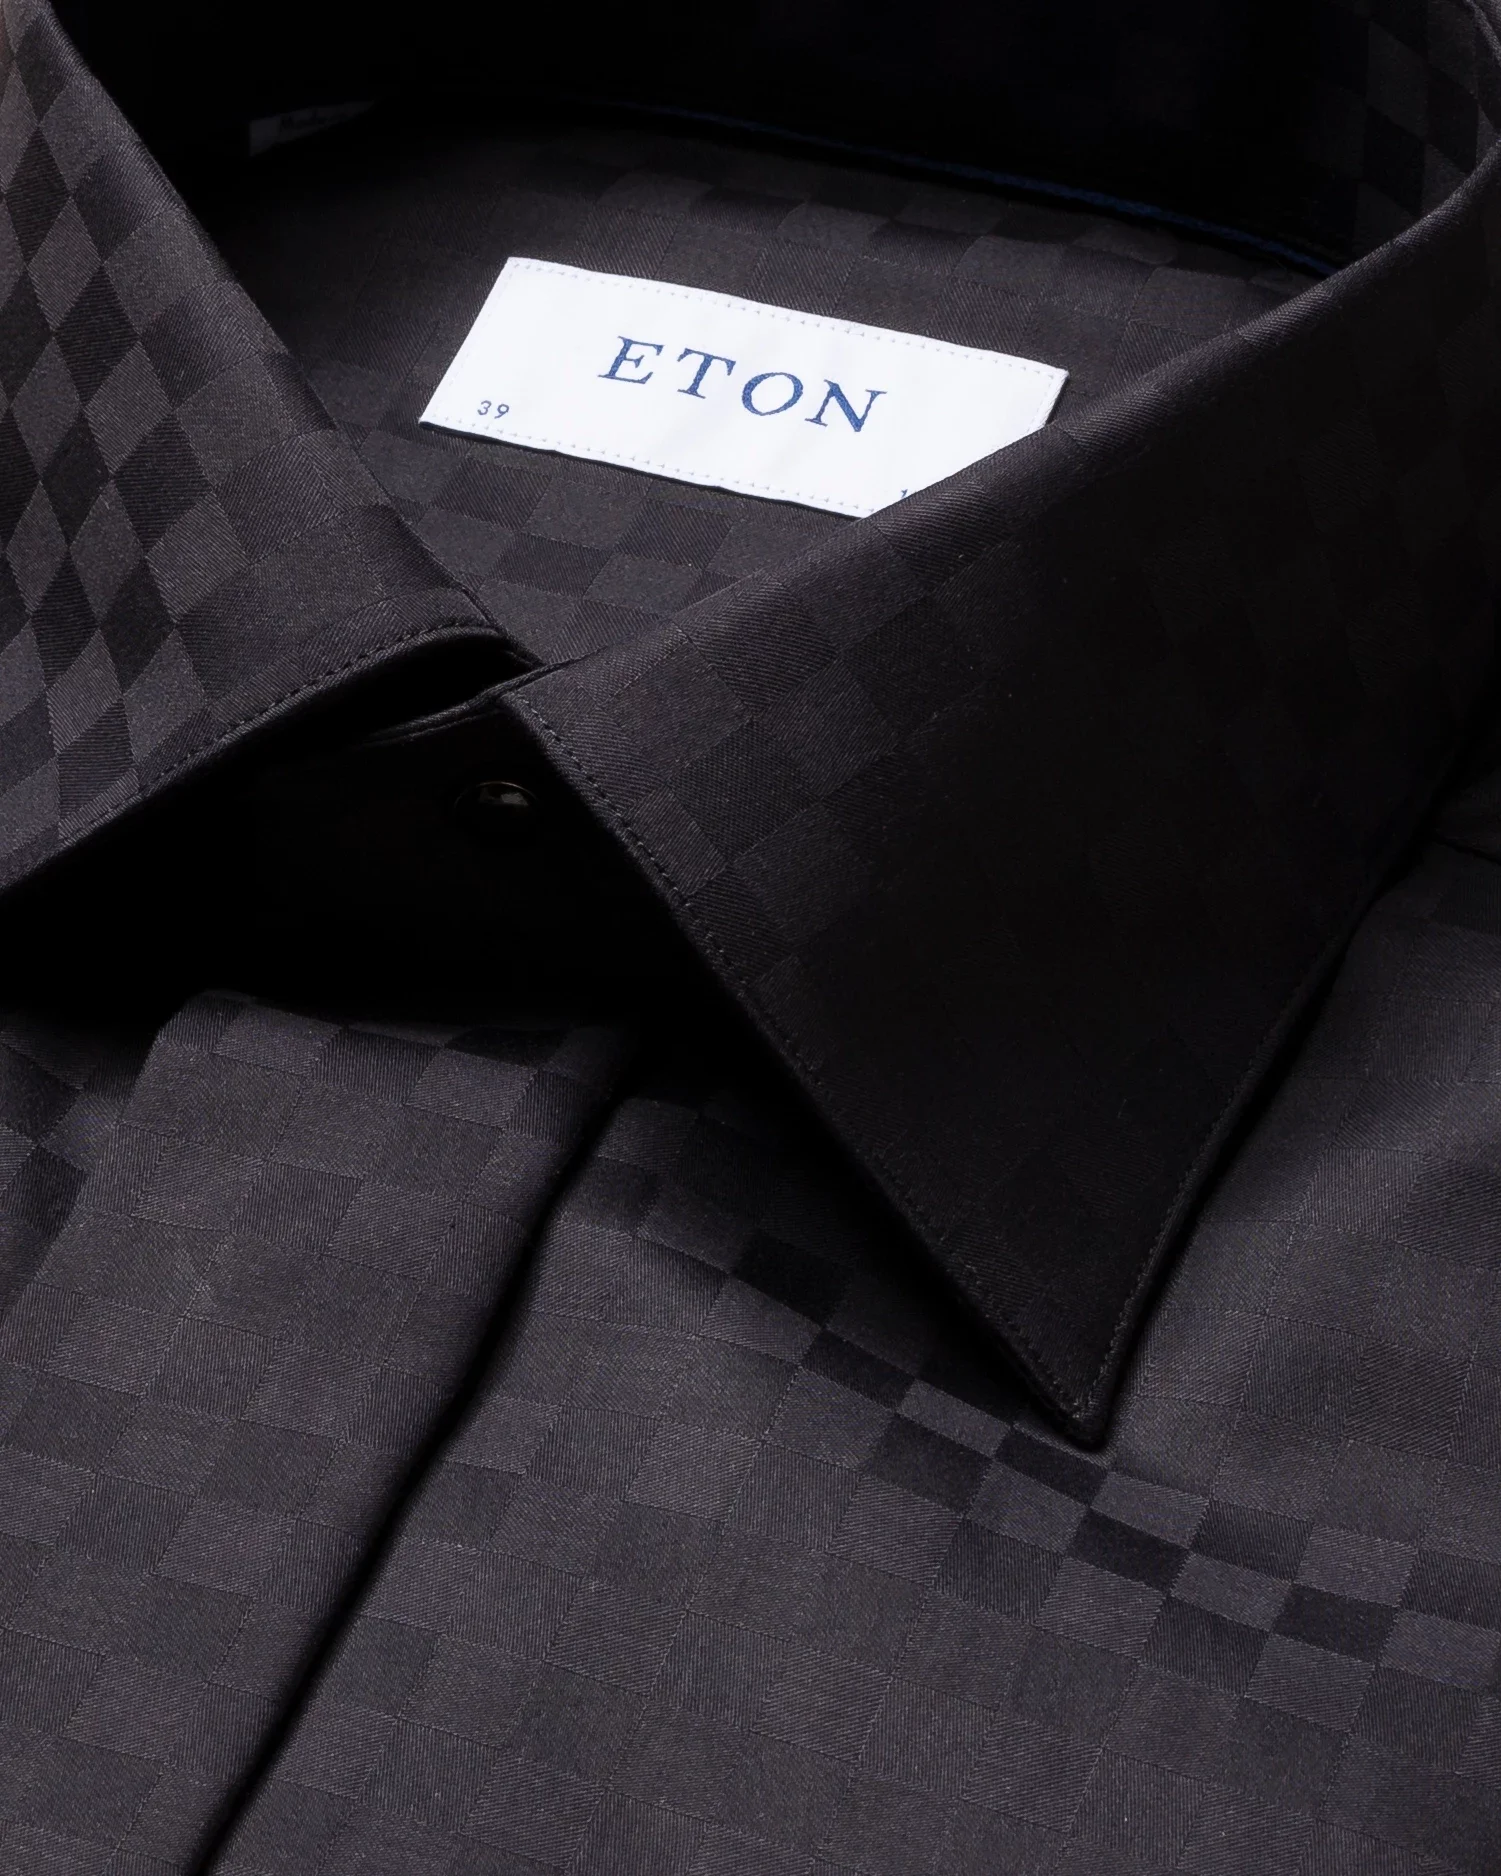 Eton - black chessboard check evening shirt